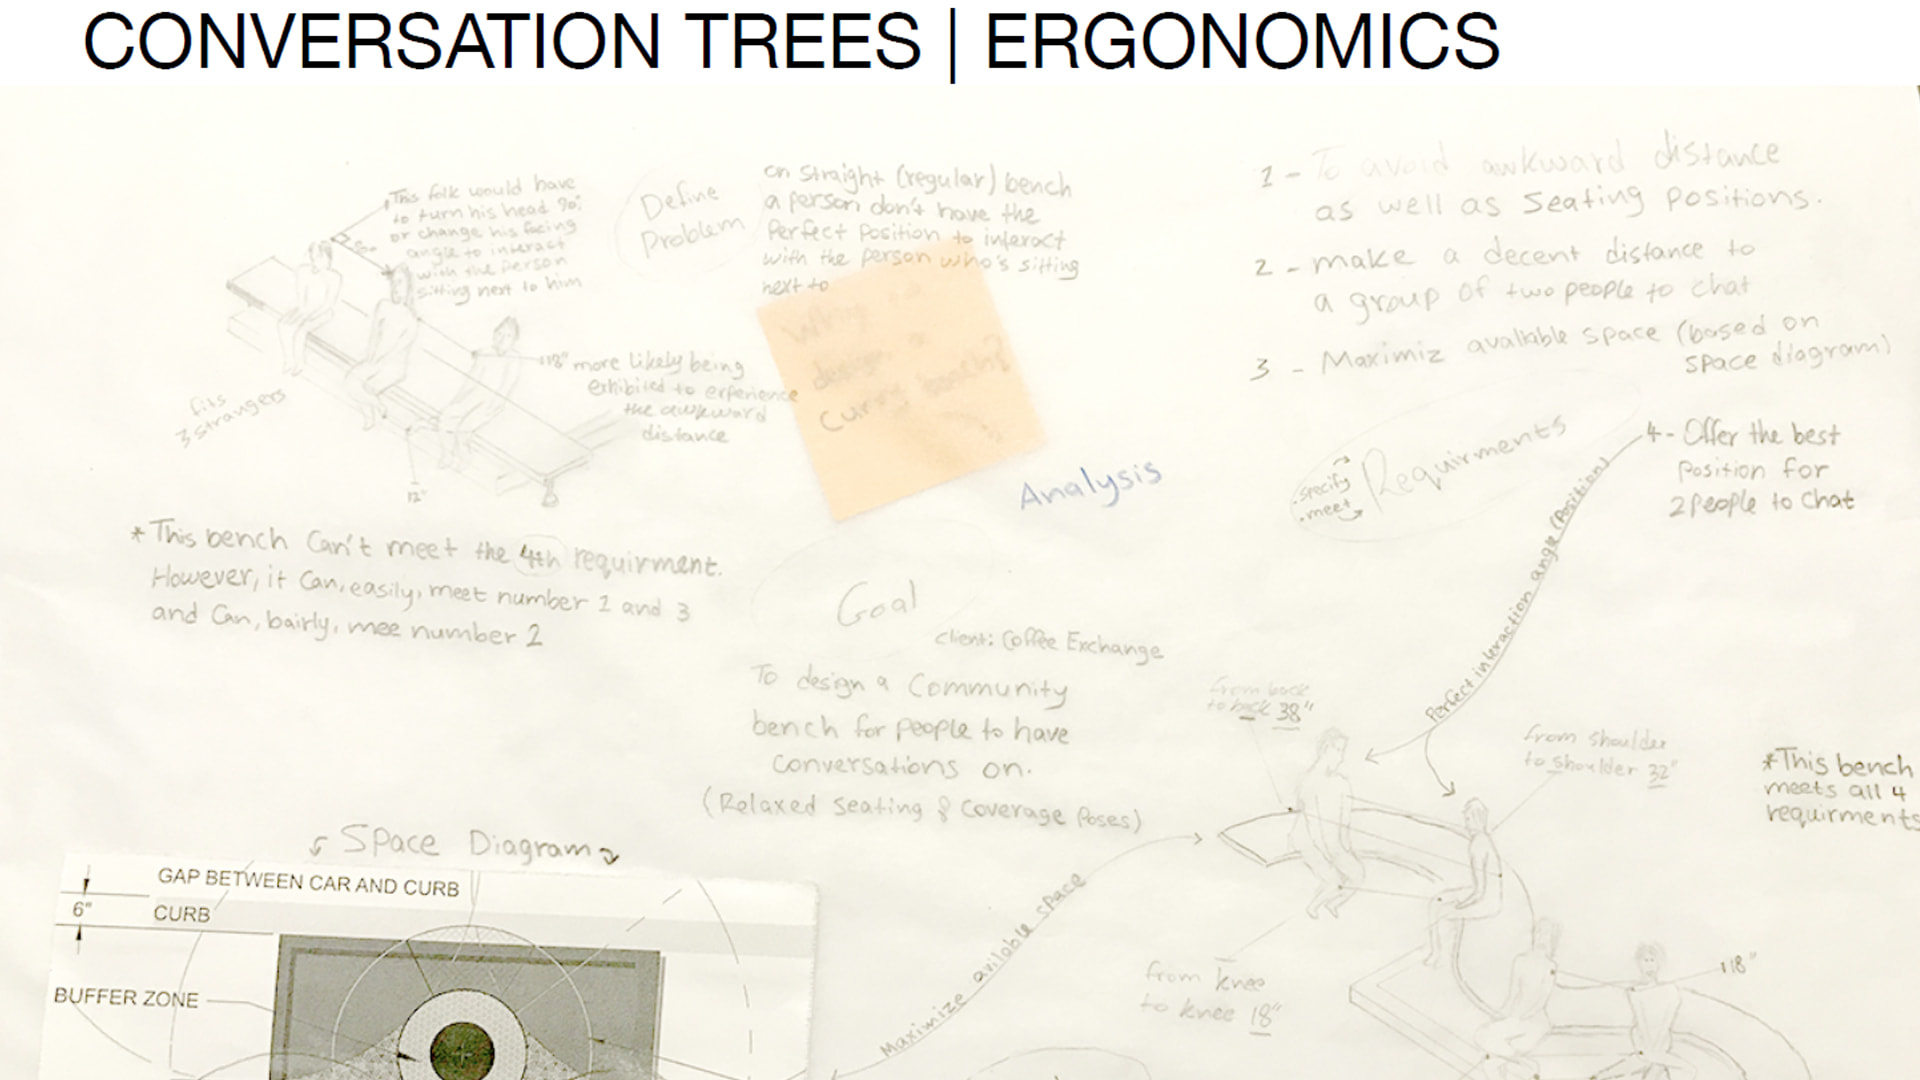 Ergonomics information for the design.